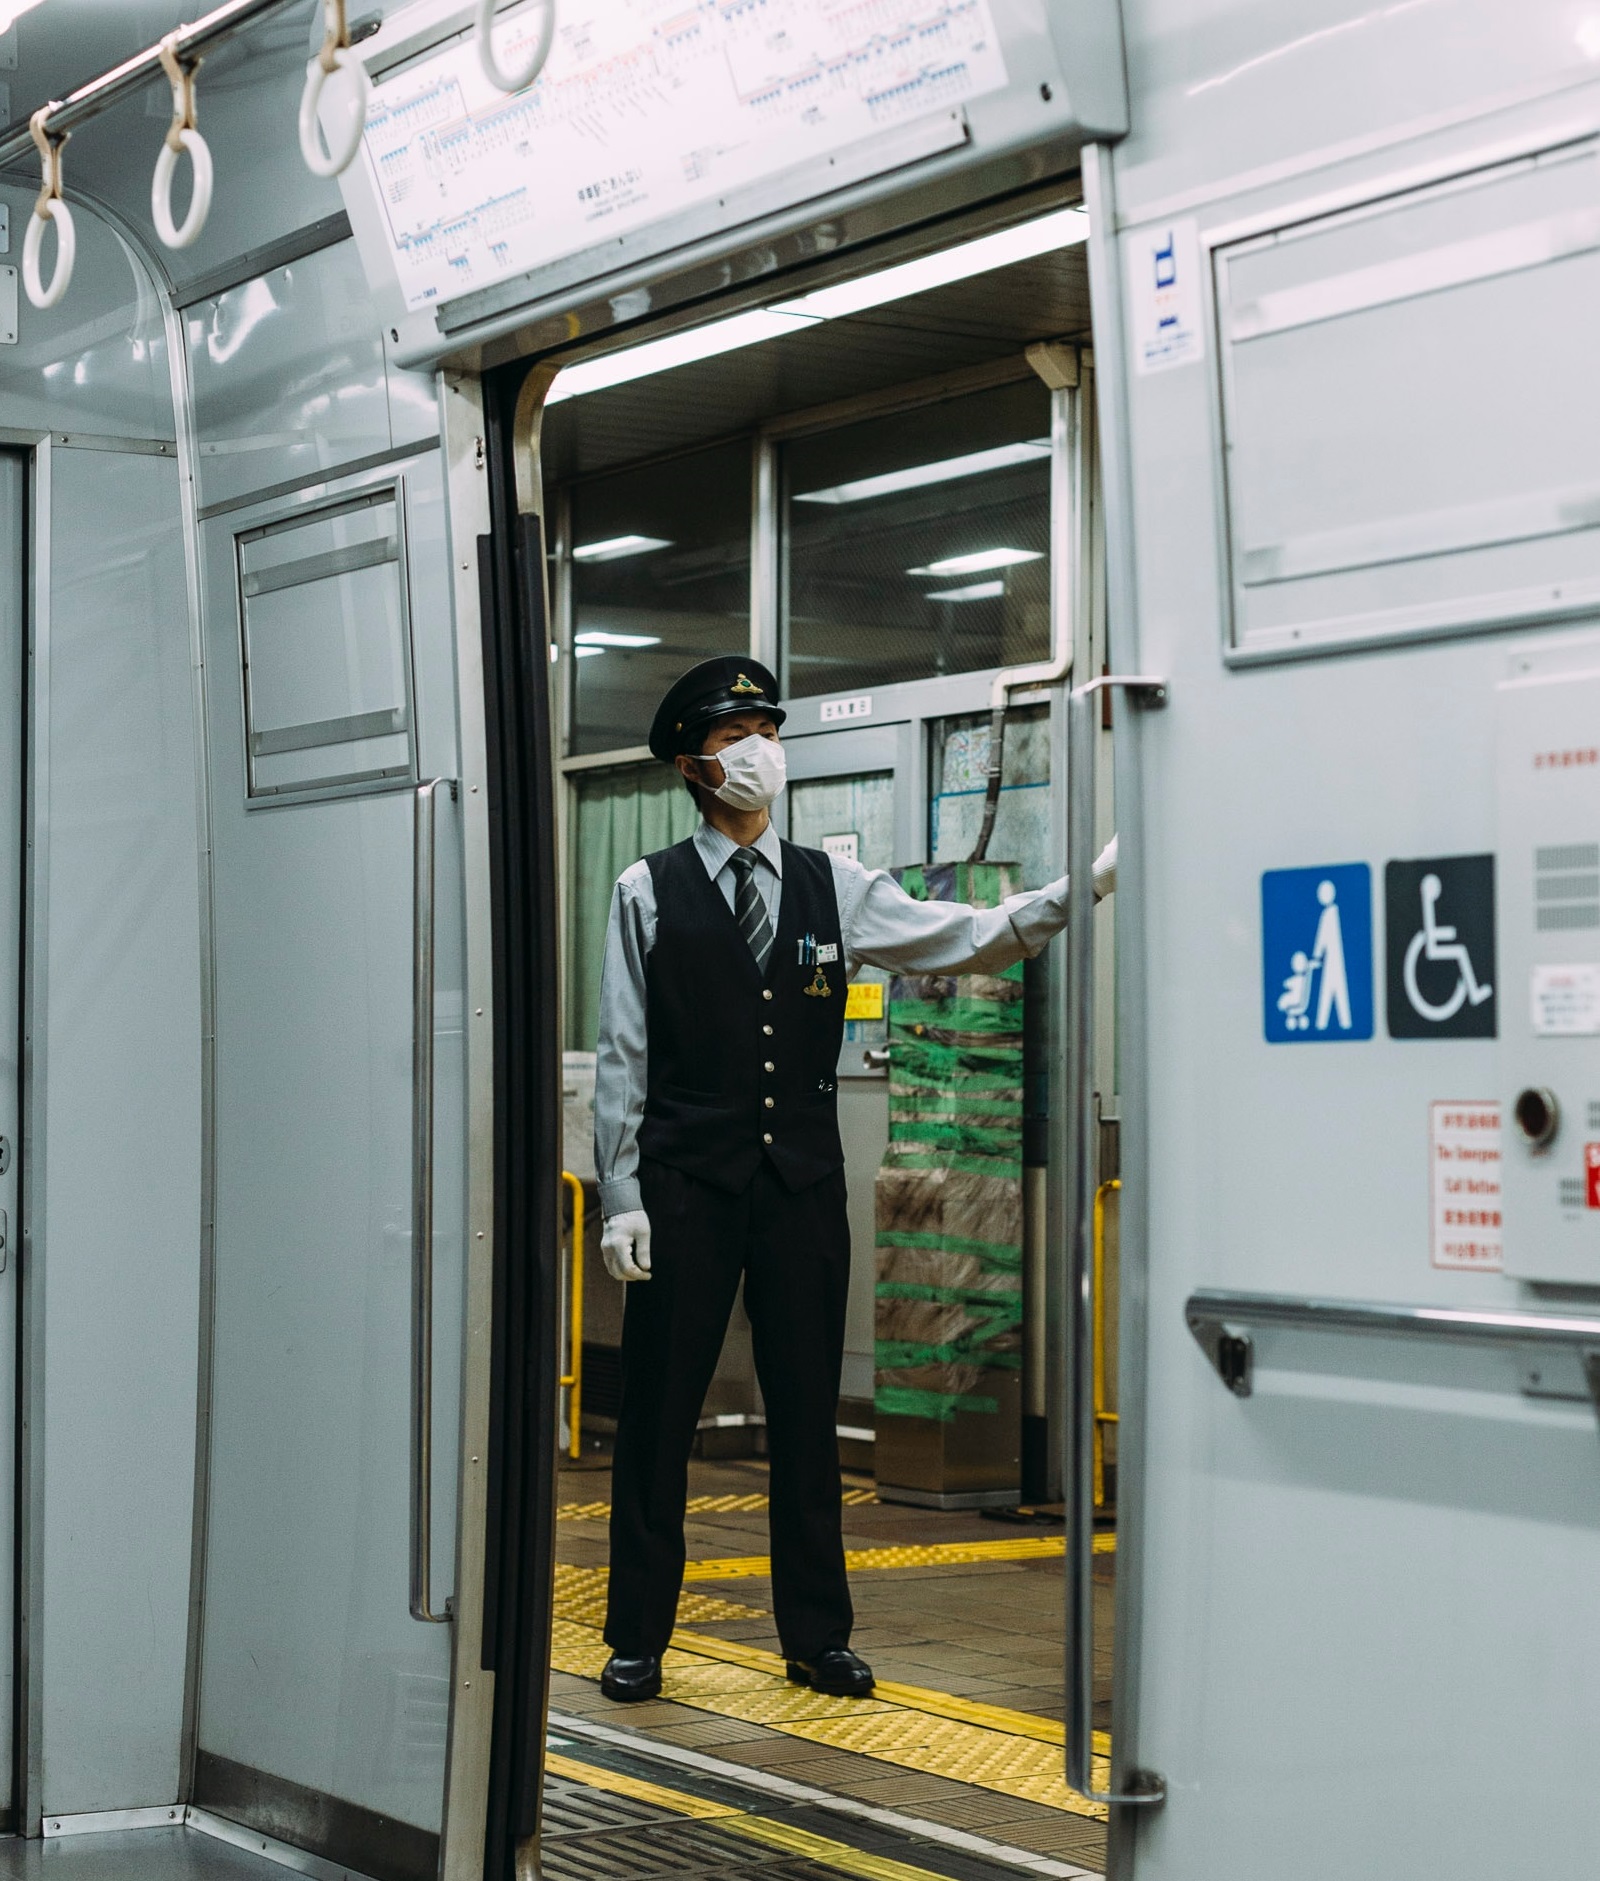 Tokyo train attendant